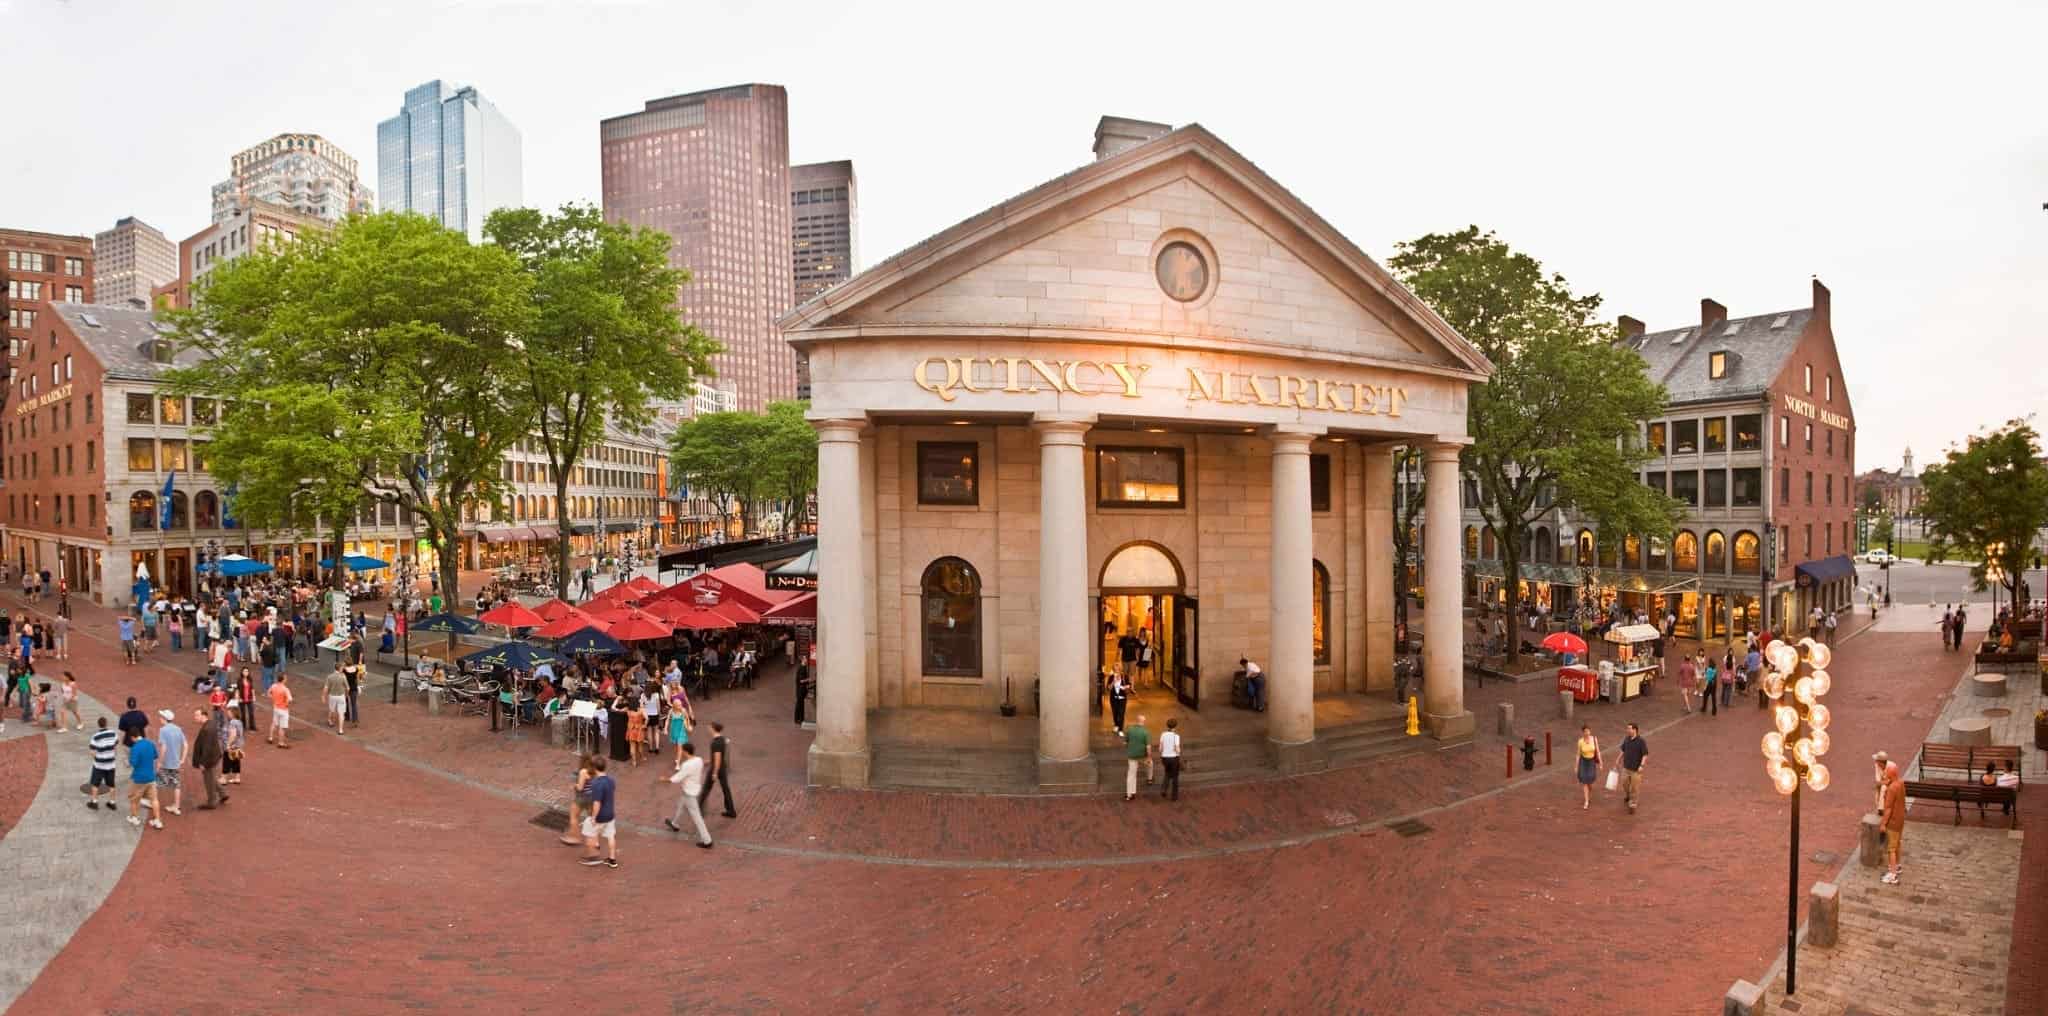 View of Quincy Market in Boston, Massachusetts